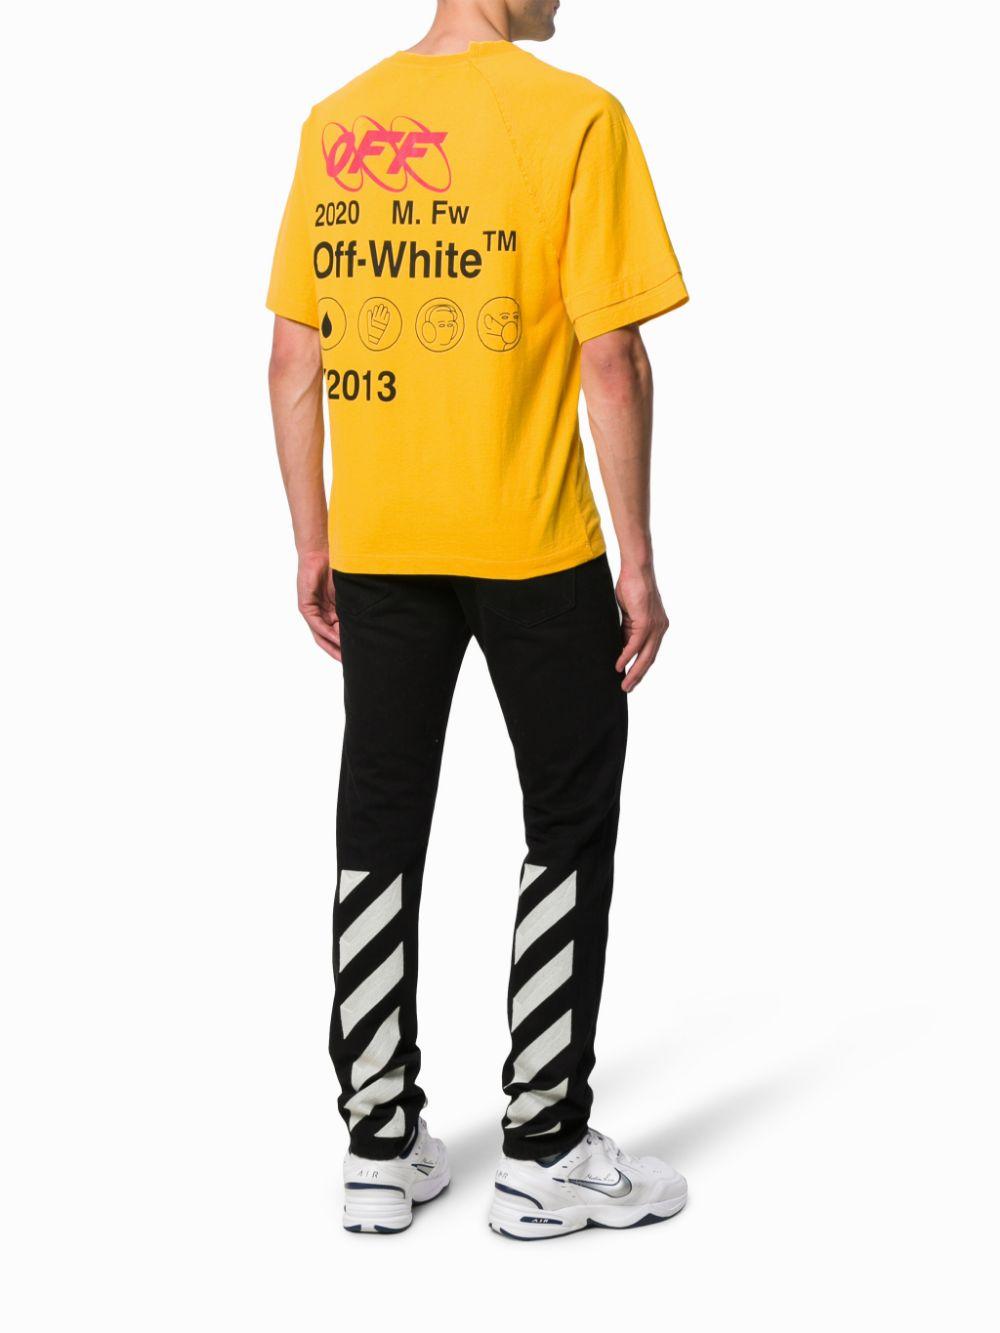 yellow and black off white shirt